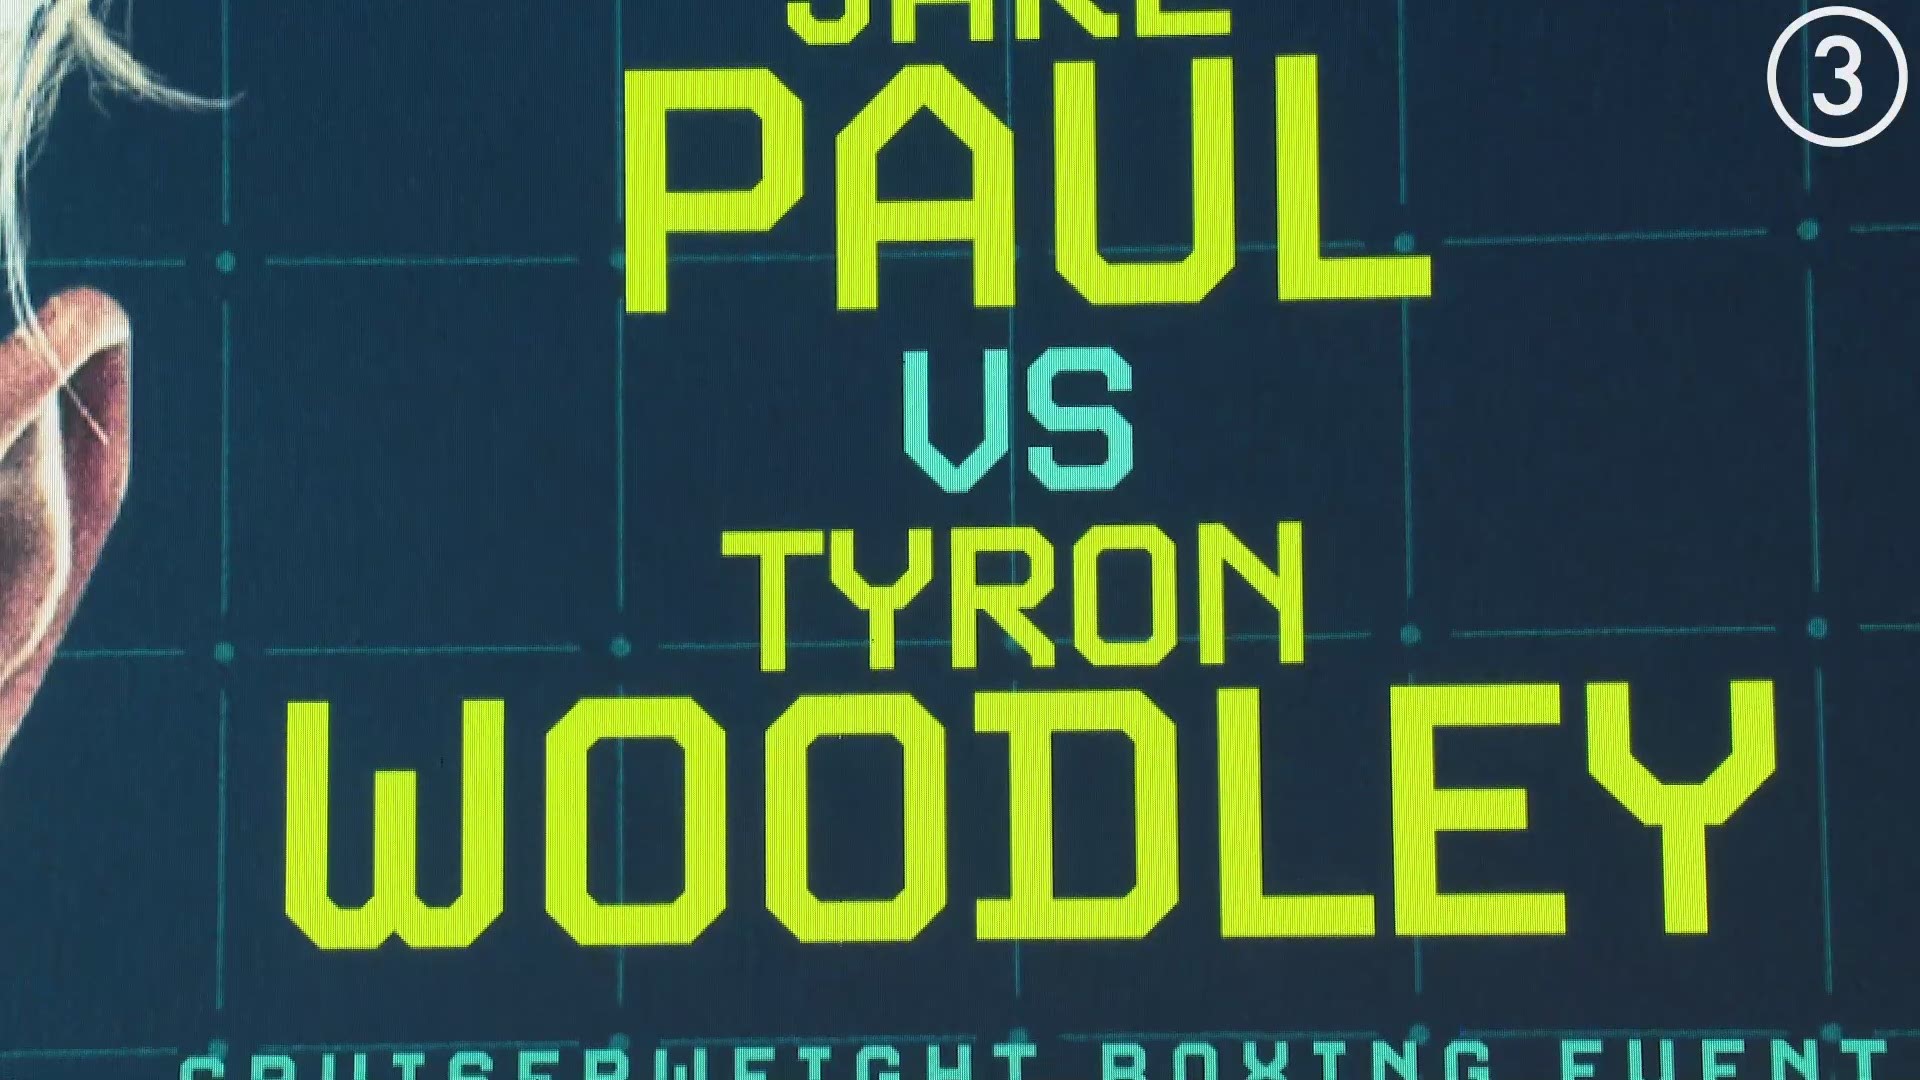 Jake paul vs tyron woodley live stream